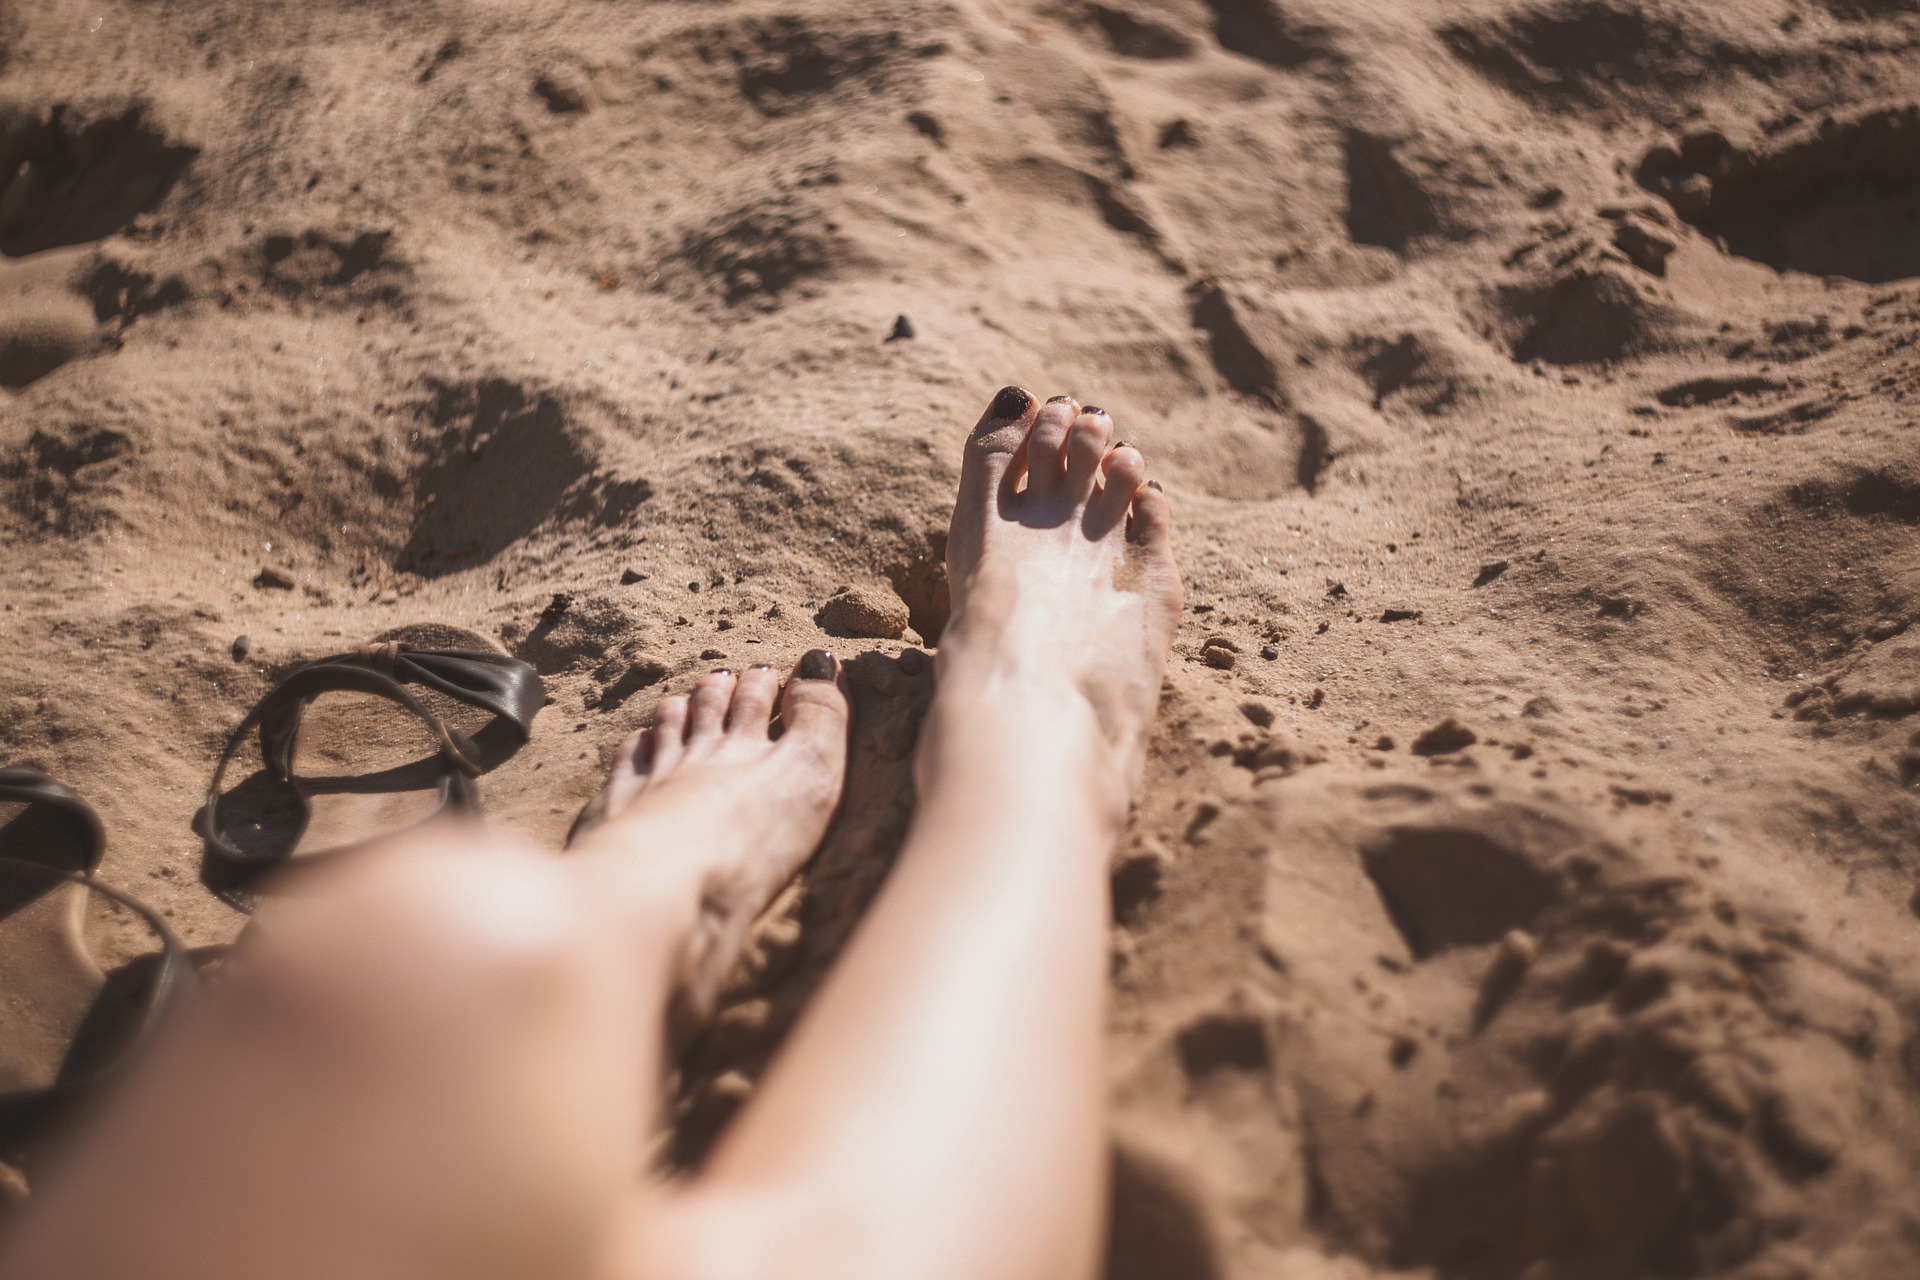 Nudist Beach Feet - Revenge Porn Victims Seeking Help & Advice? Here's Laws to Help You